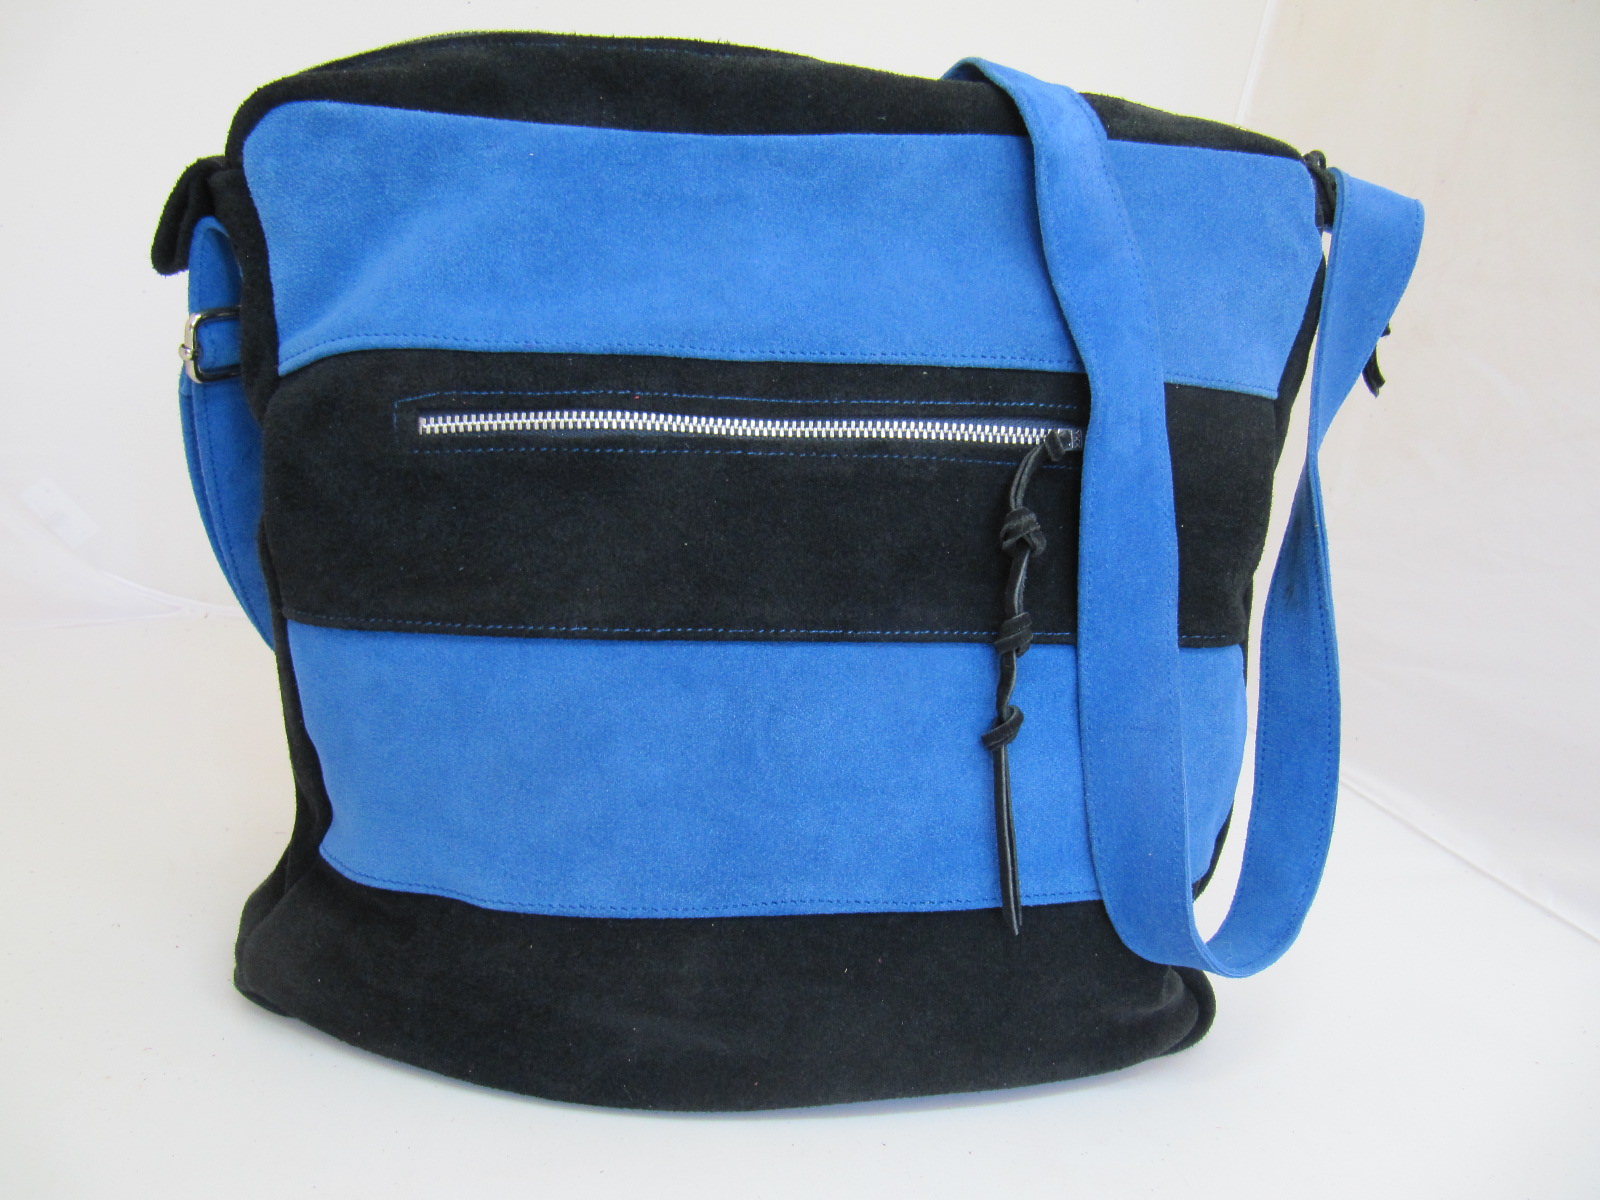 Soft suede panel handbag turquoise & black